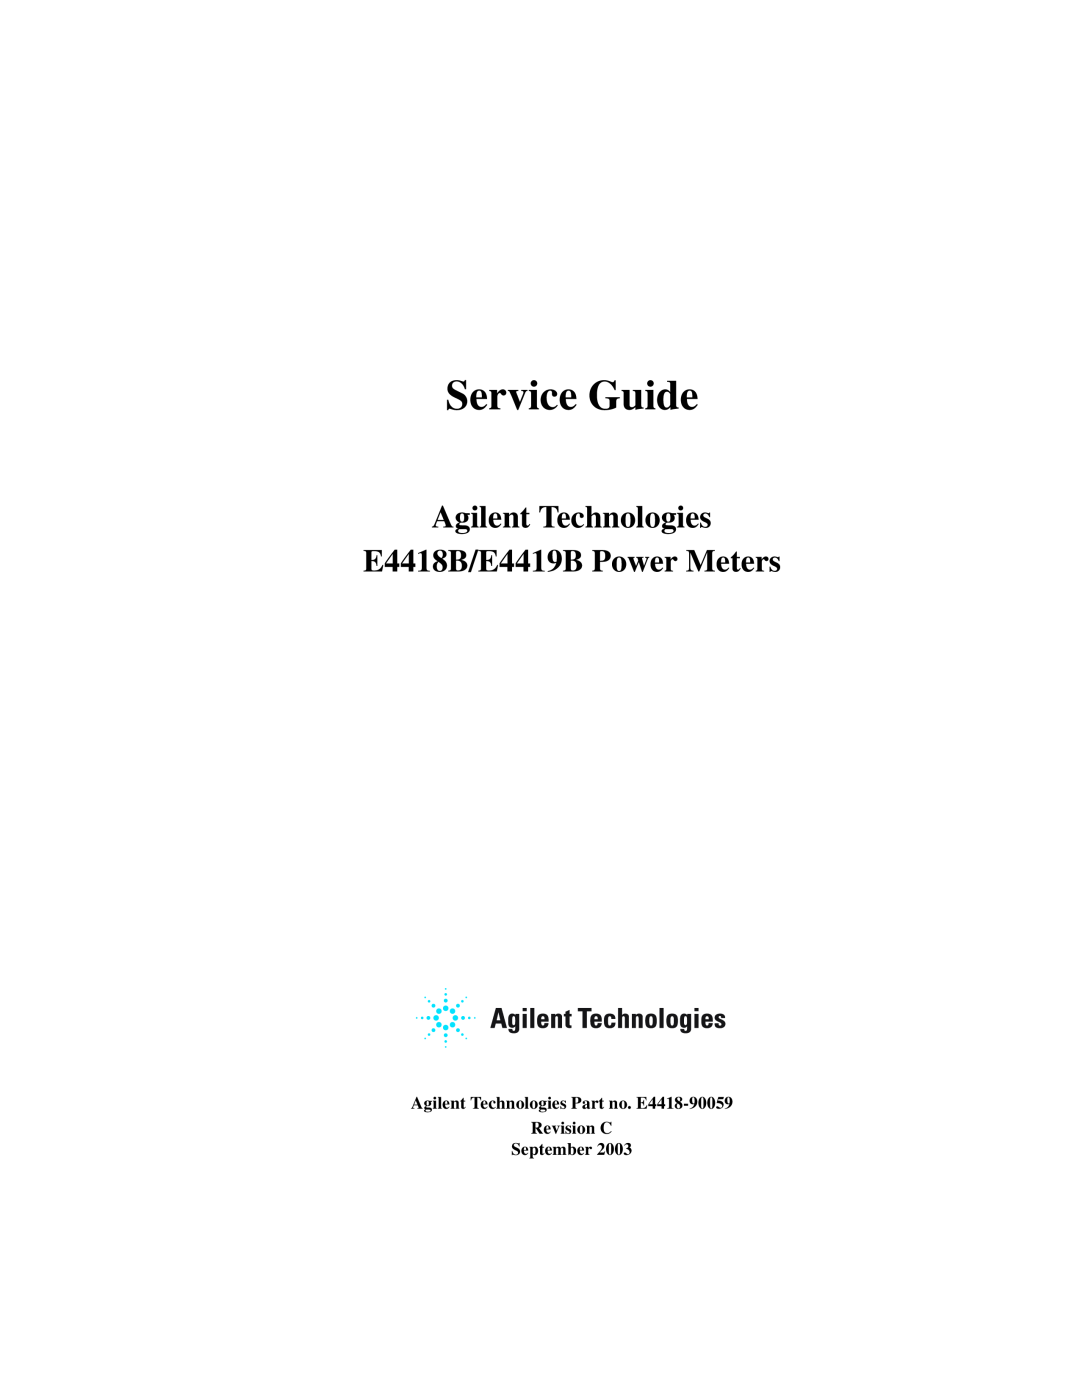 Agilent Technologies e4419b, e4418b manual Agilent Technologies E4418B/E4419B Power Meters, Service Guide 